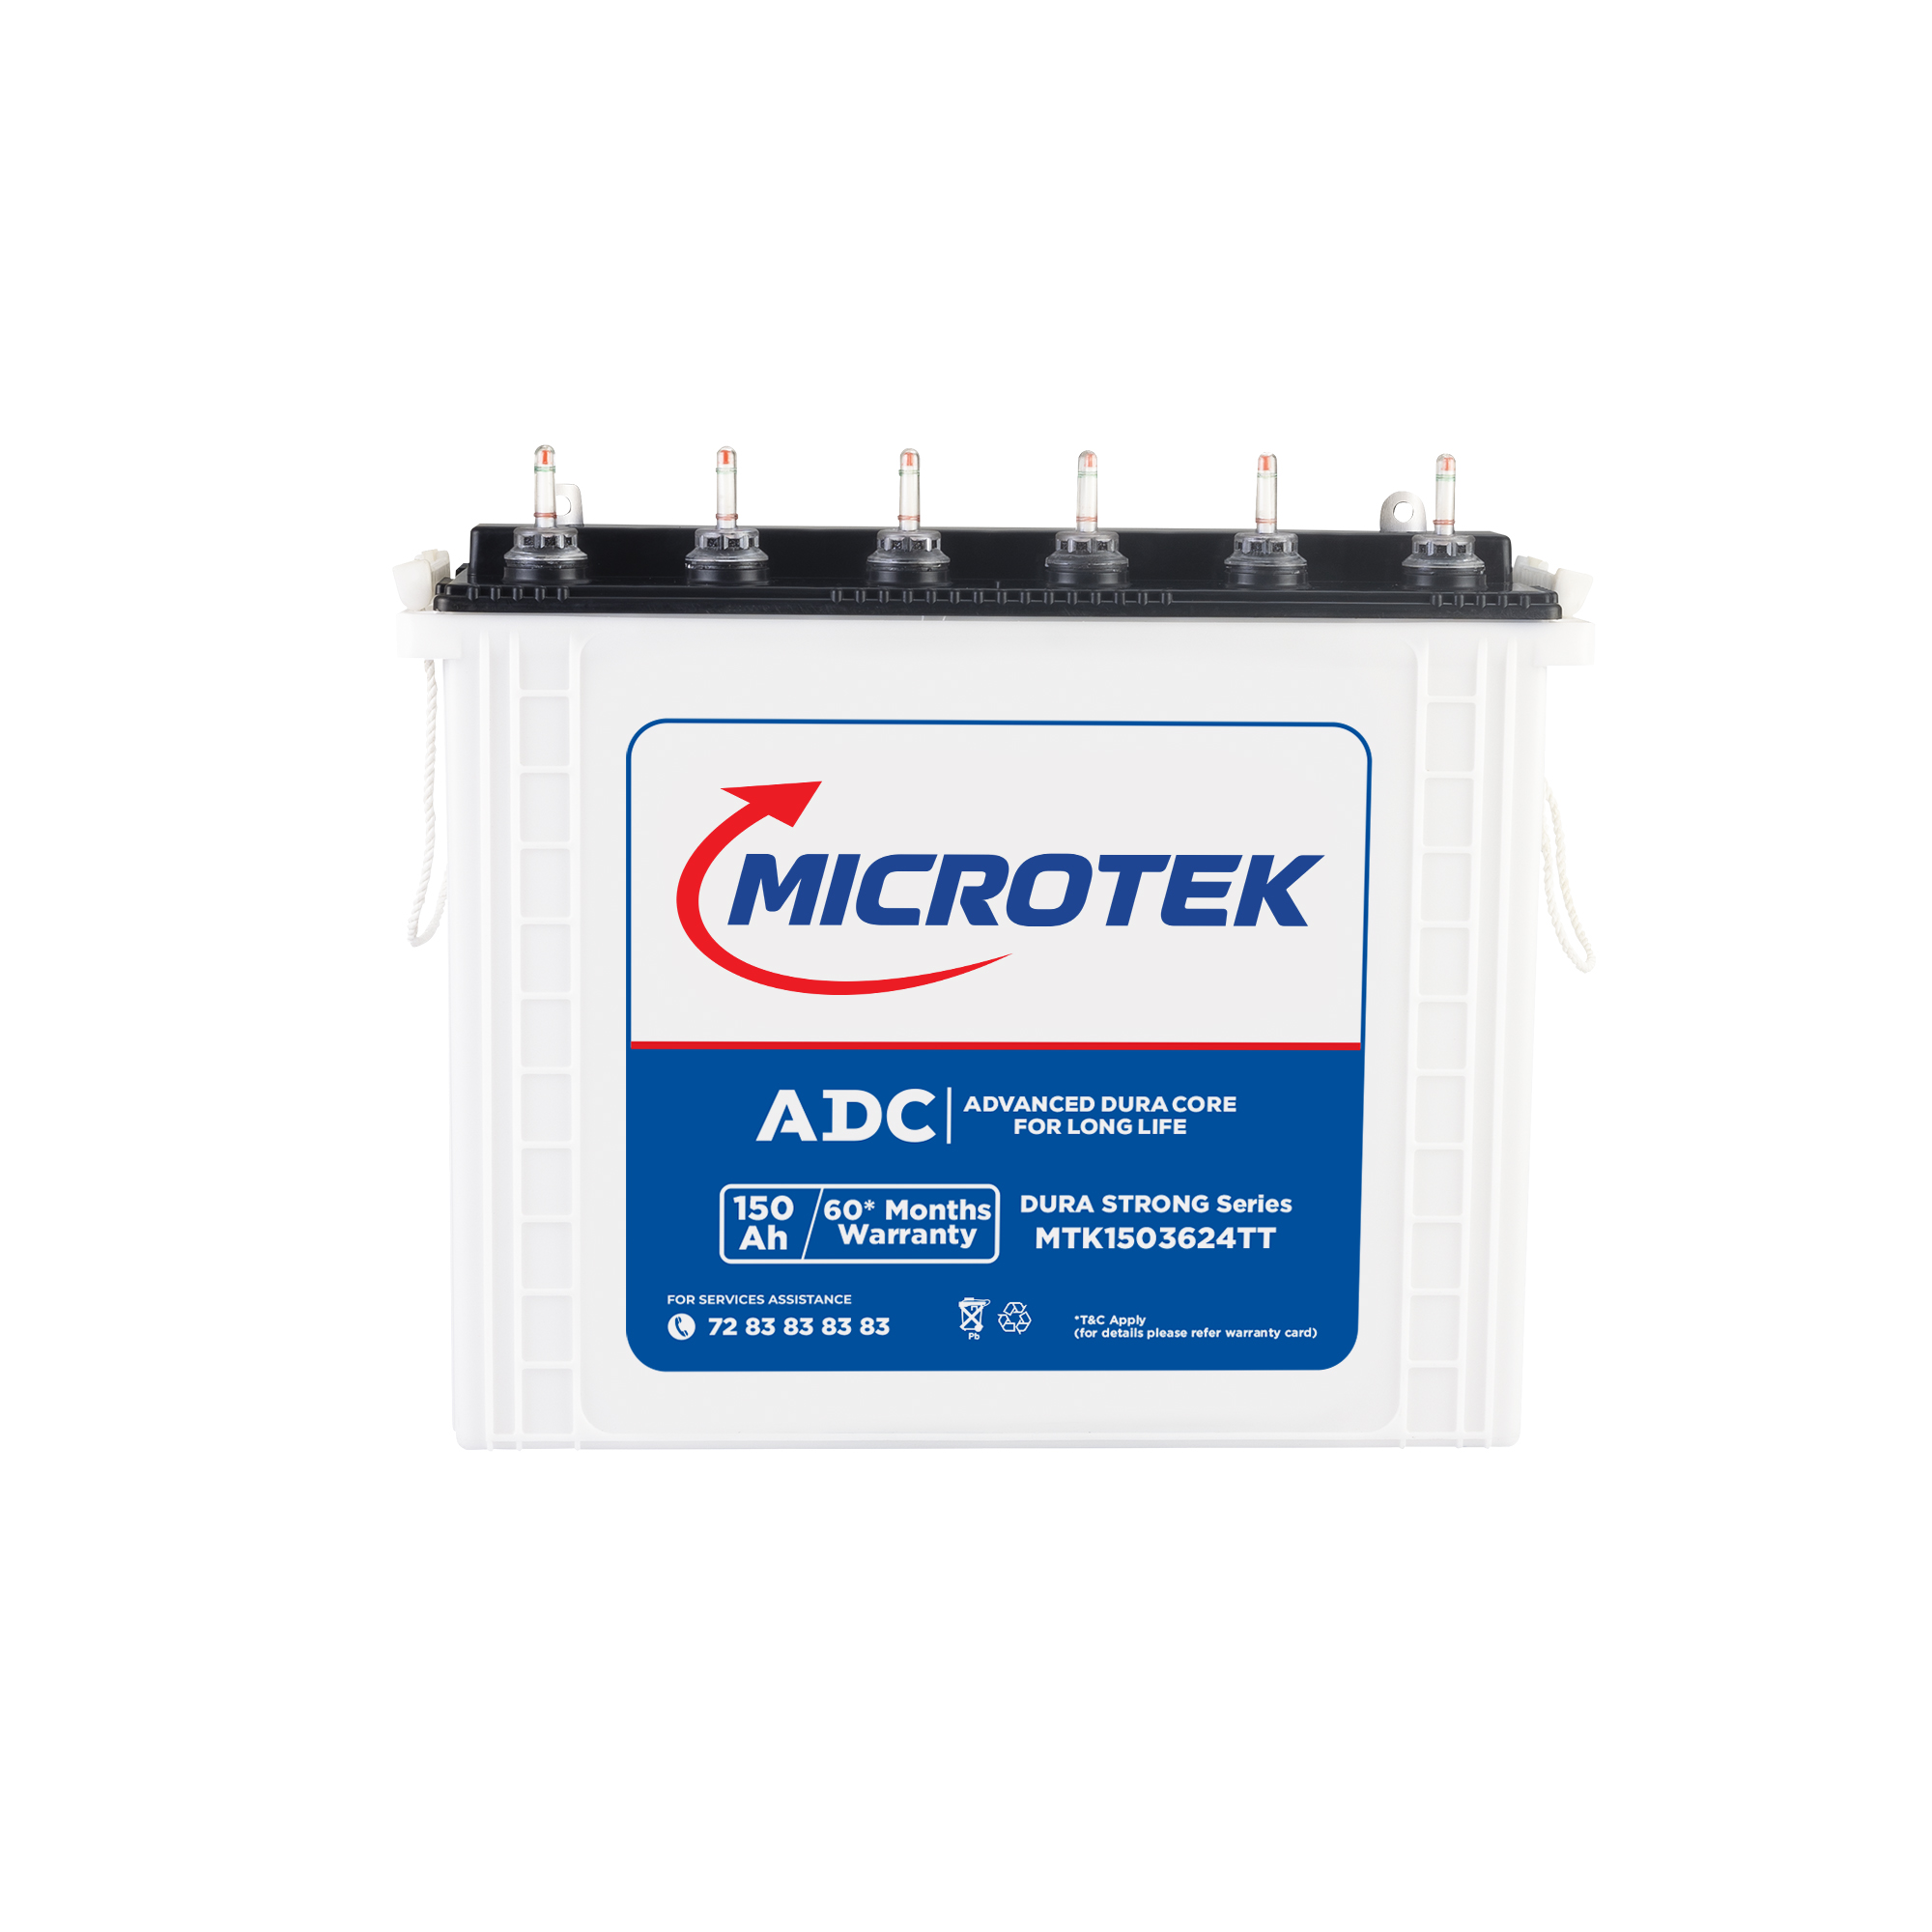 Microtek Dura Strong MTK1503624TT 150Ah/12V Inverter Battery With Advanced Dura Core Technology